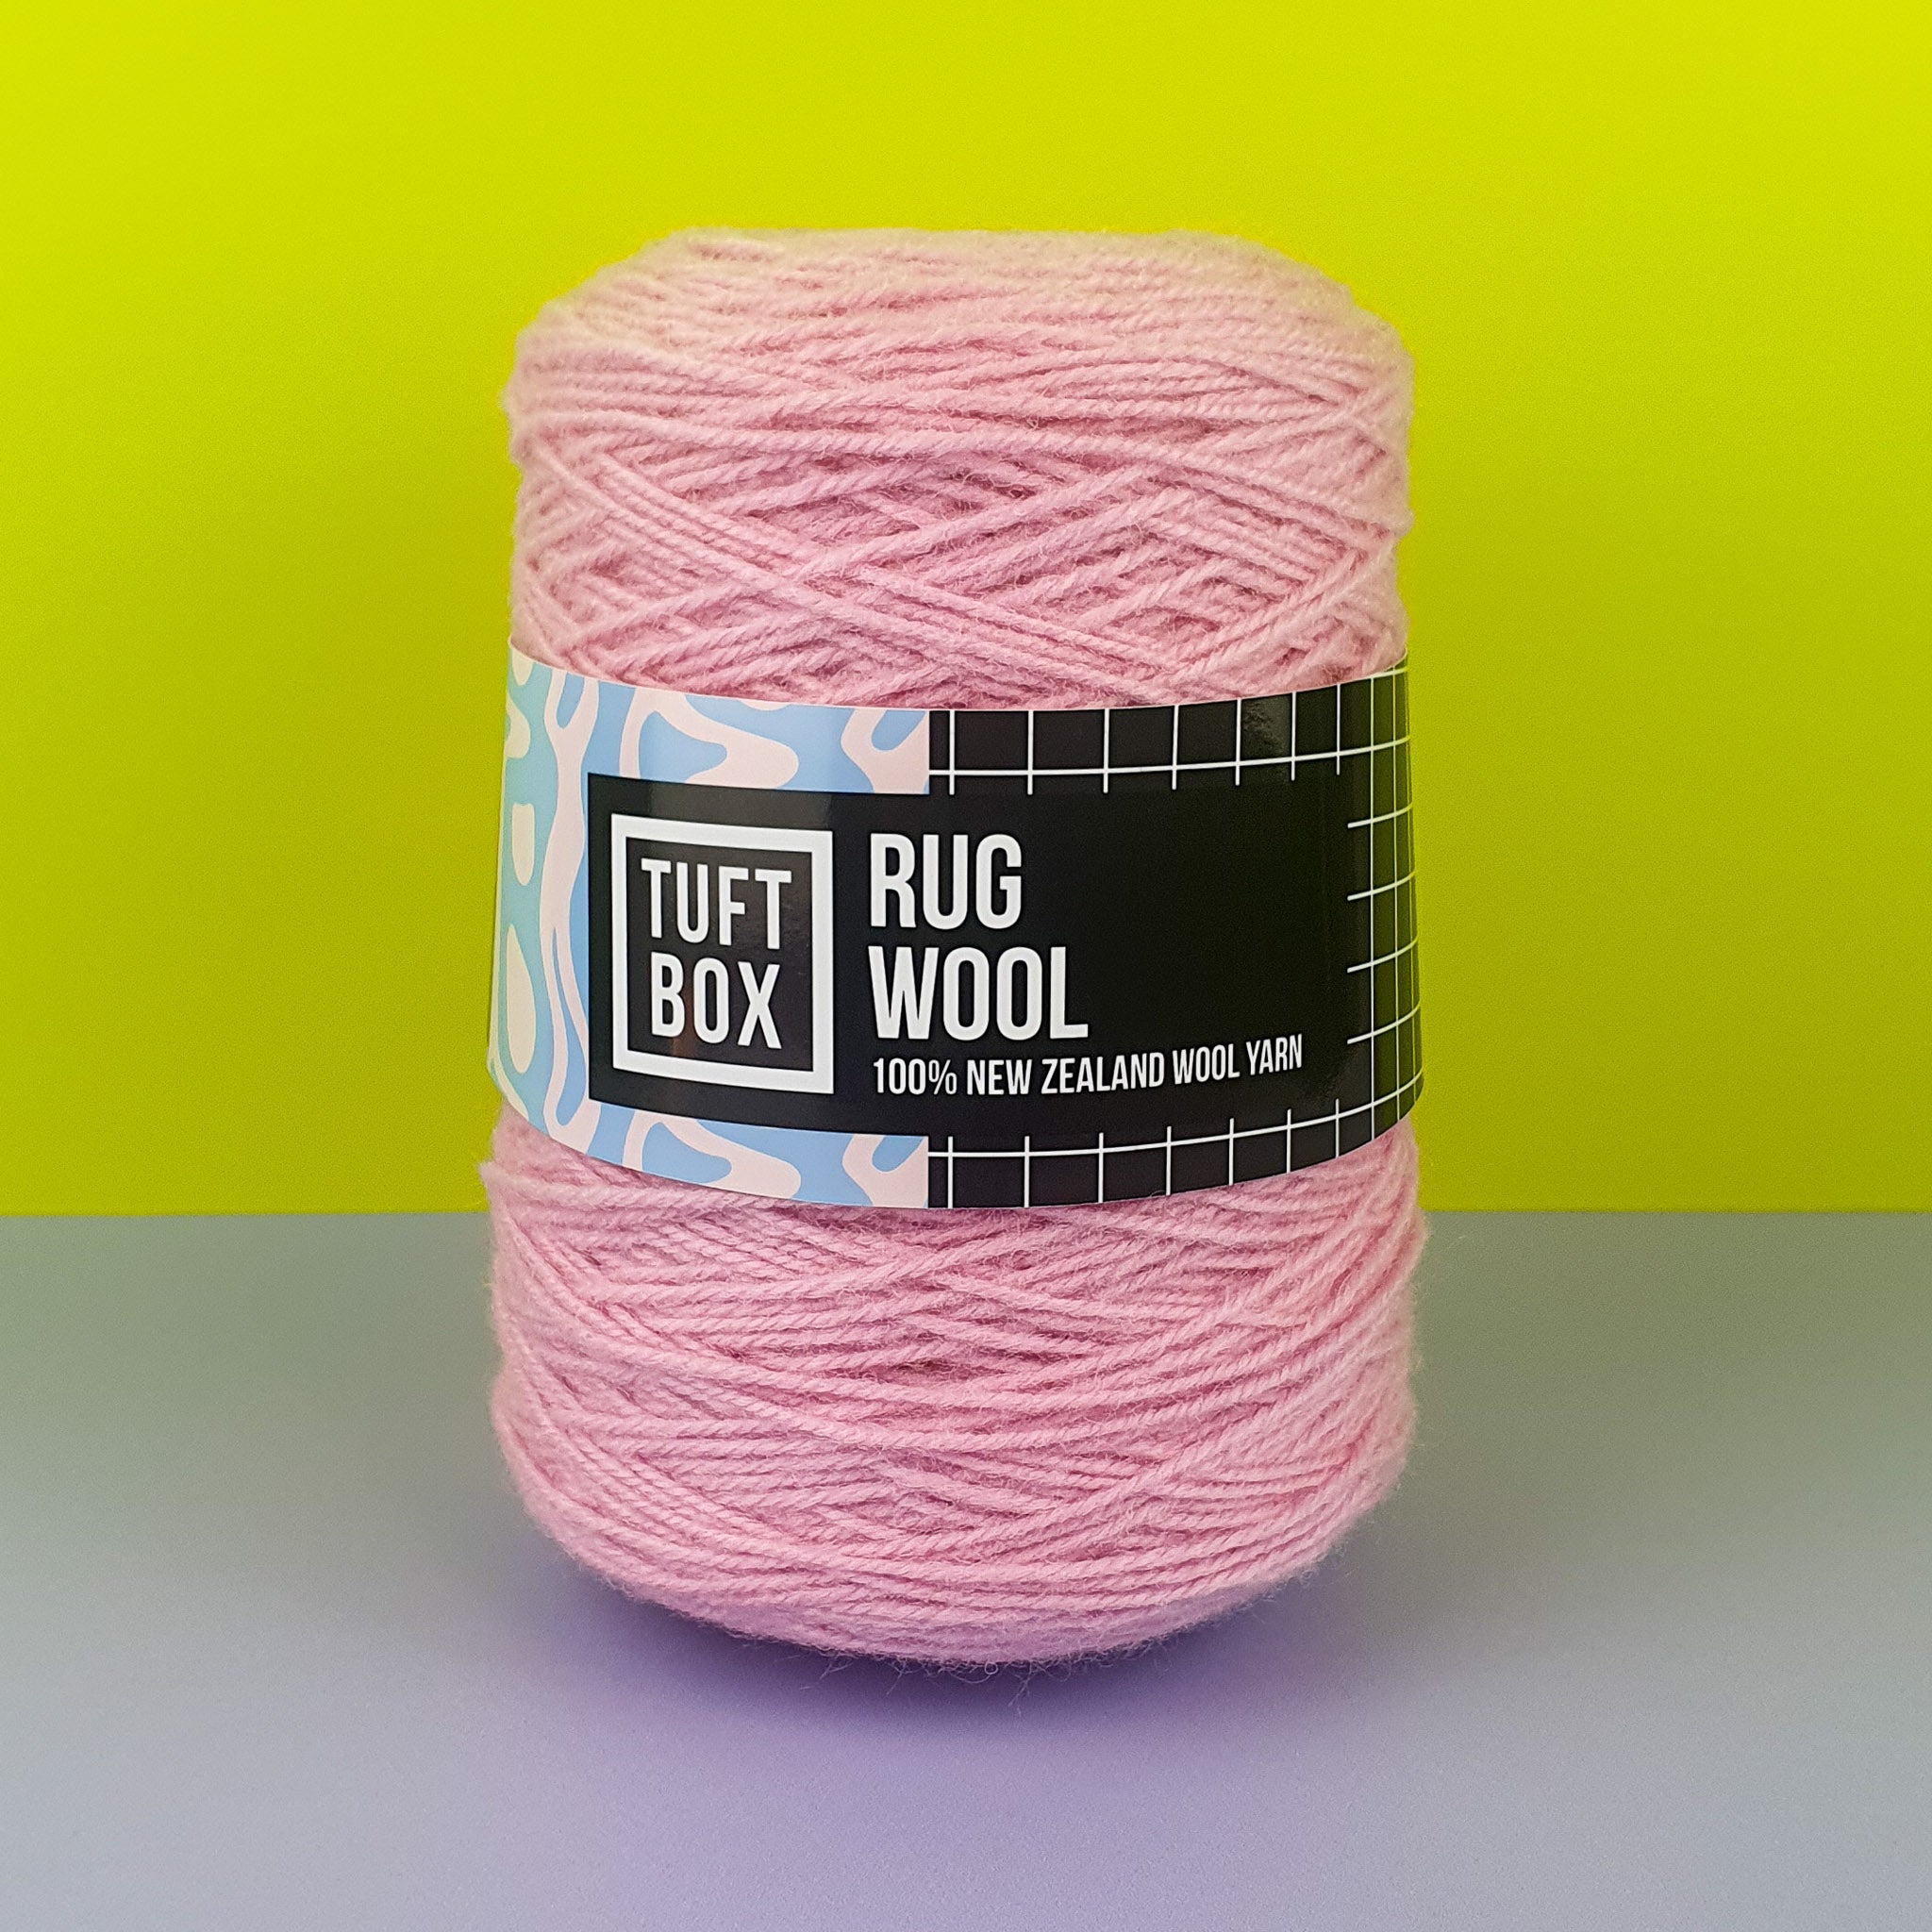 Tuftbox Rug Wool Cone Candy